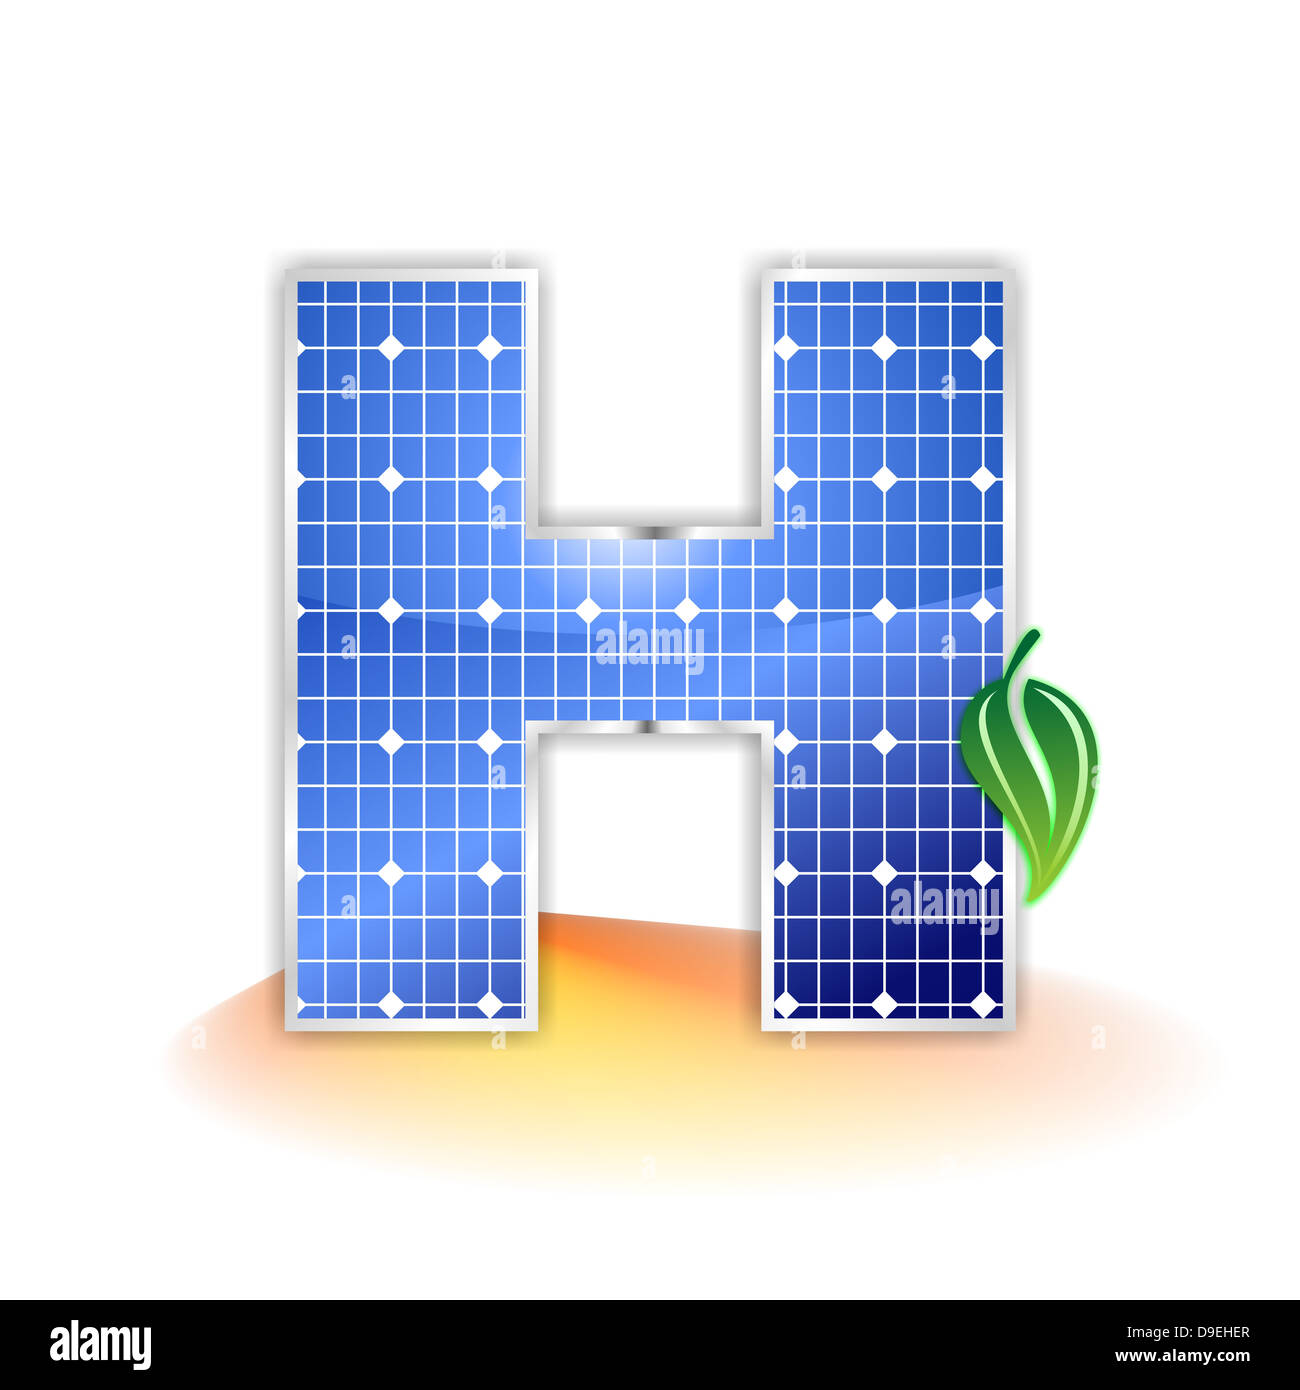 H, capital, letter H, solar panels, illustration, icon, texture Stock Photo